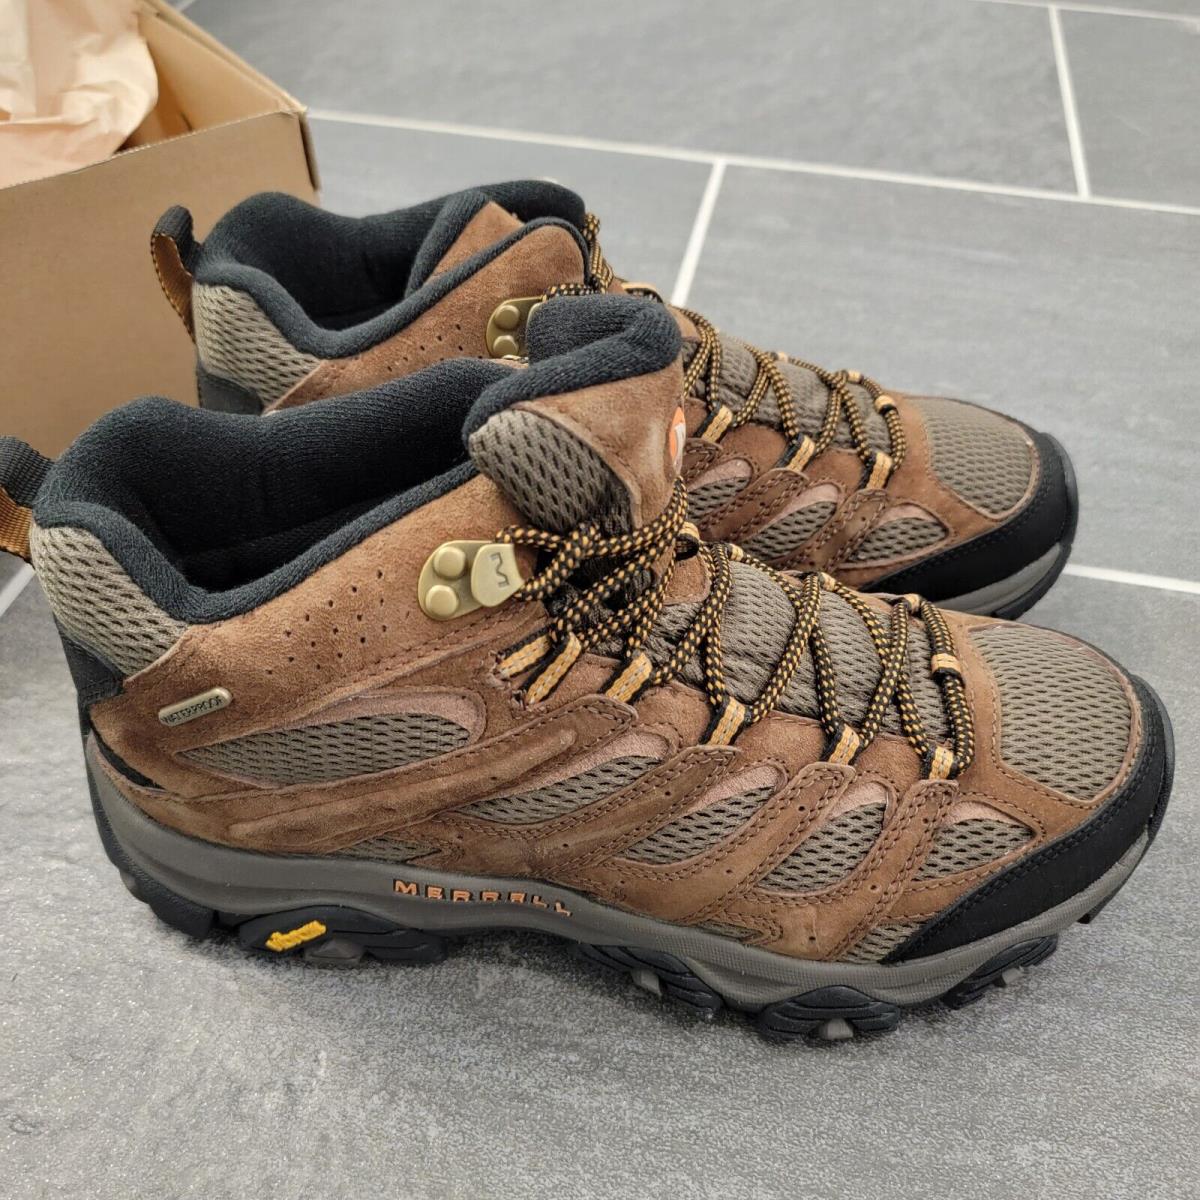 Merrell Moab 3 Mid WP Hiking Shoes Boots Men s Sz 8.5 Earth Waterproof